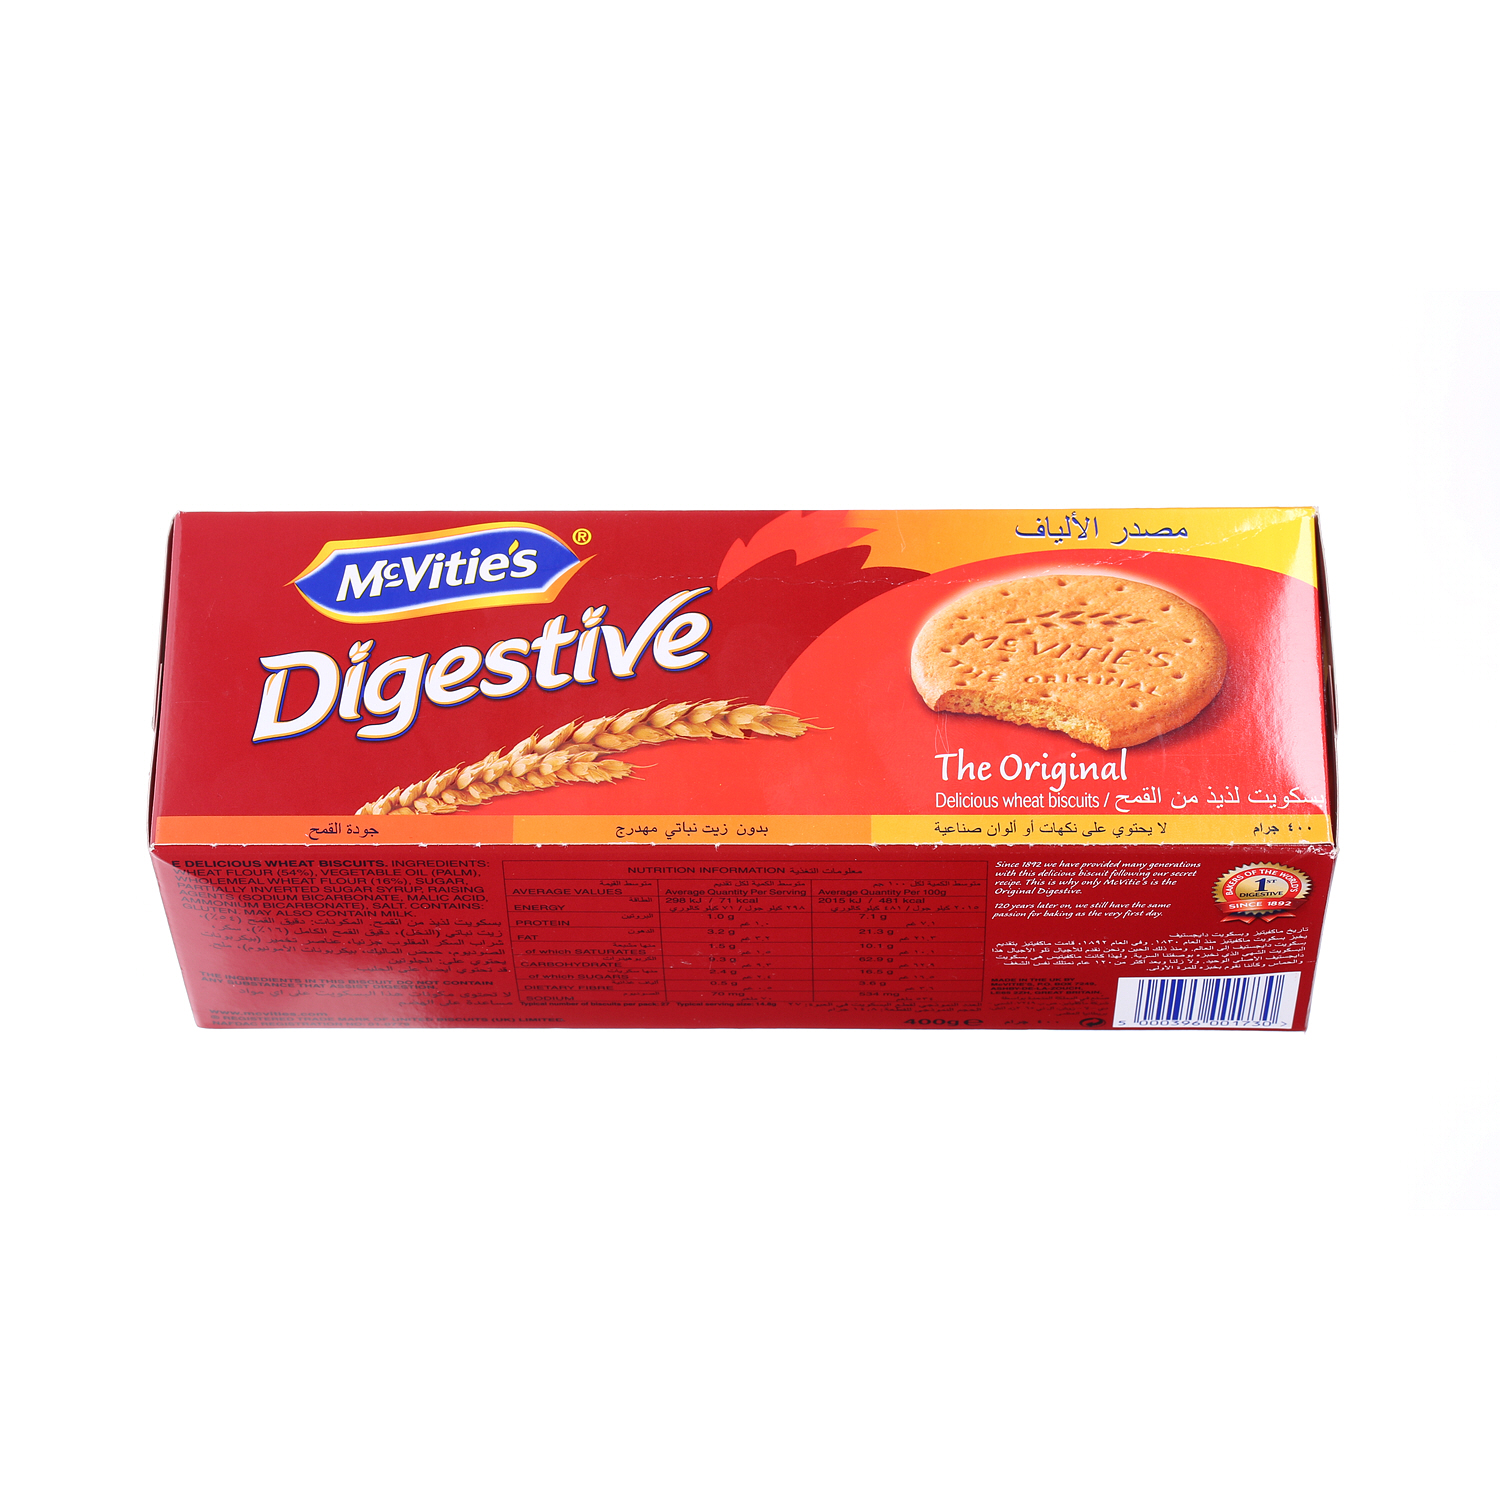 Mcvities Digestive Biscuits Regular 400 g